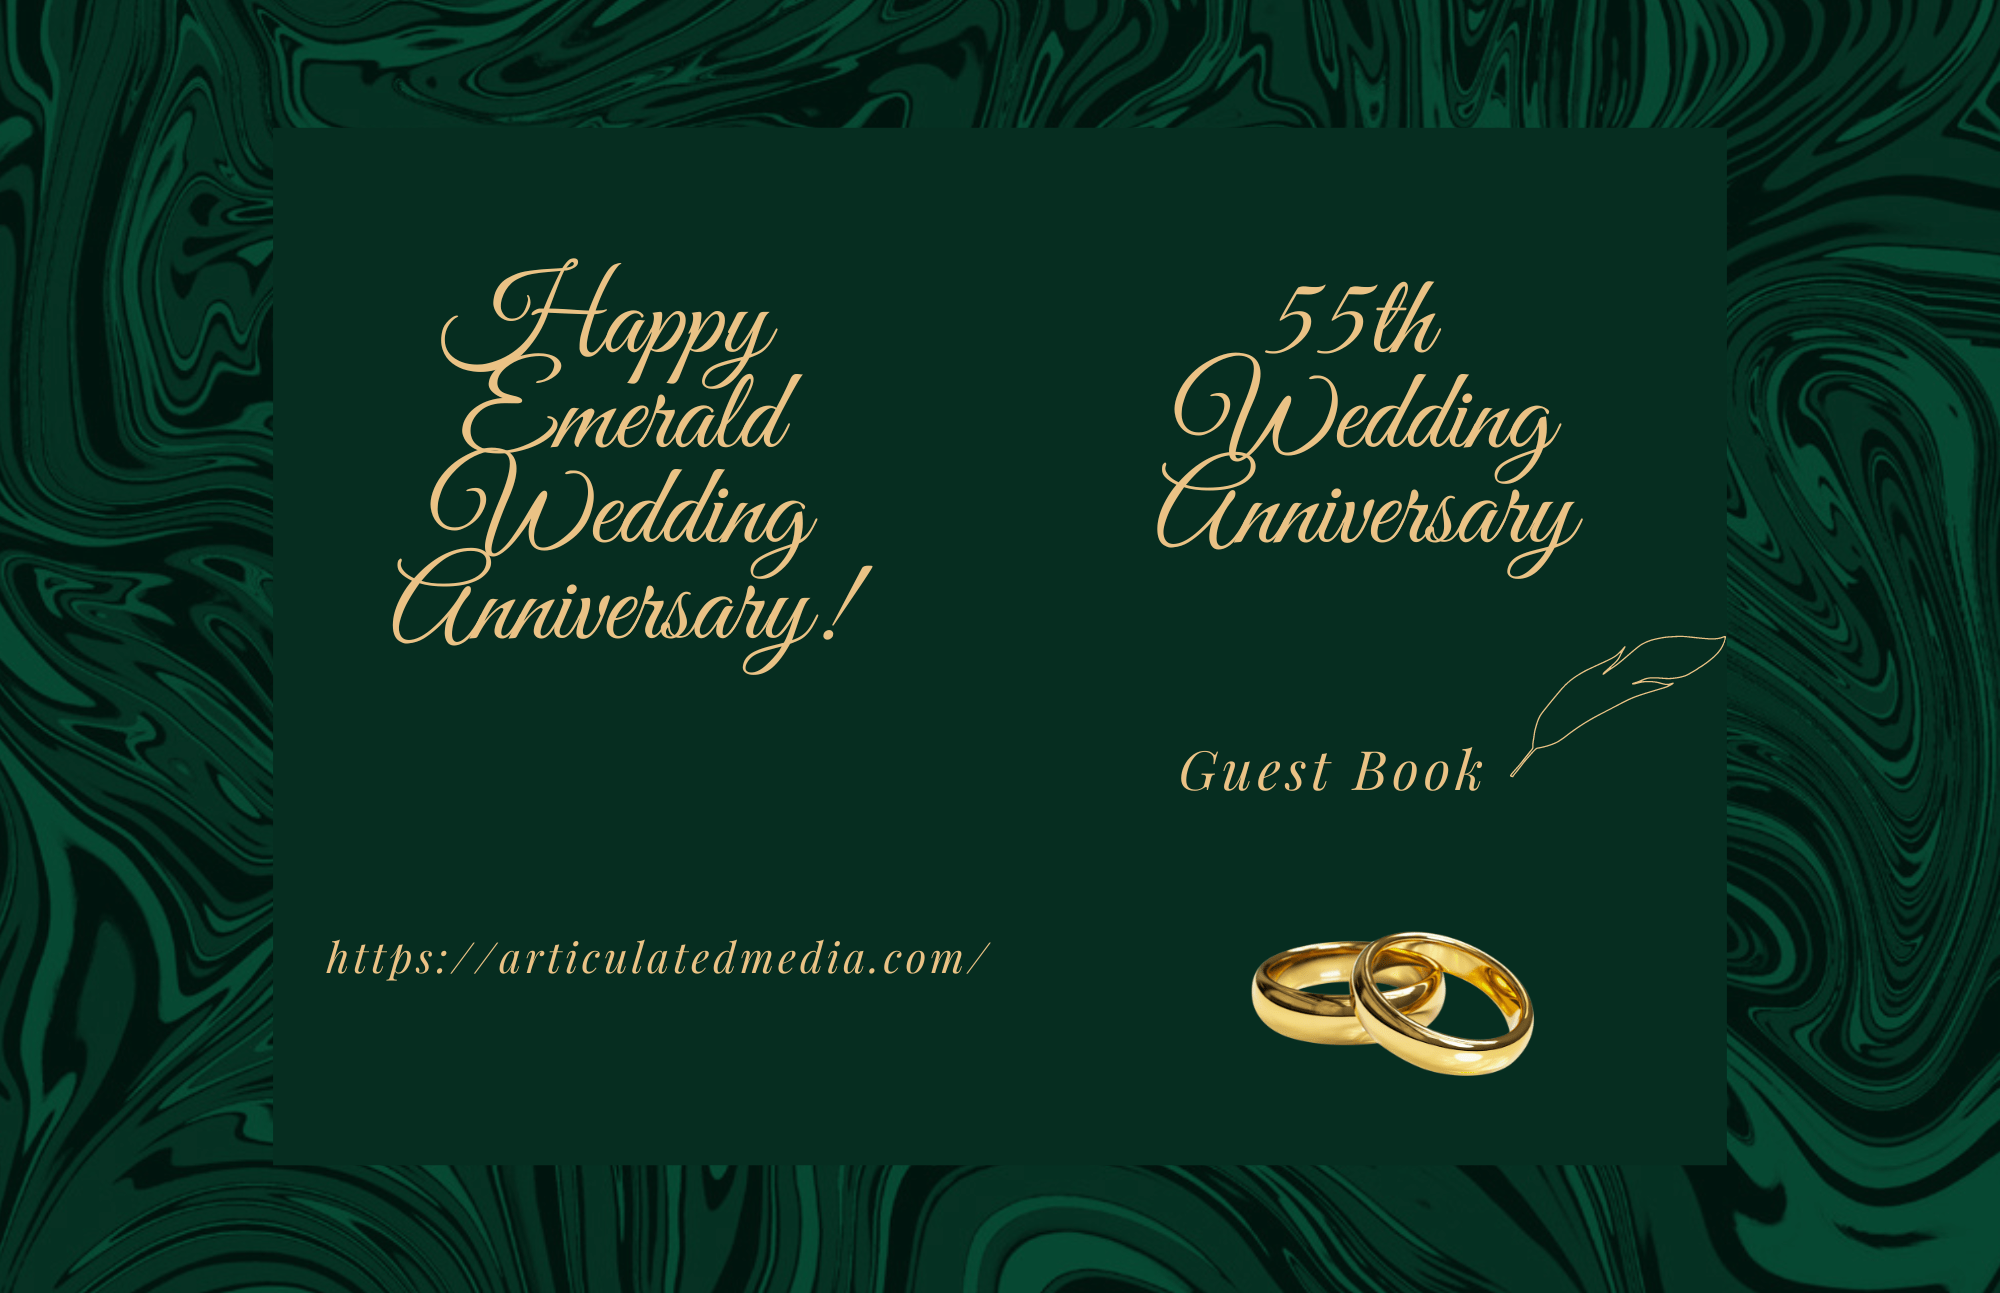 P.B. Young 55th Emerald Wedding Anniversary